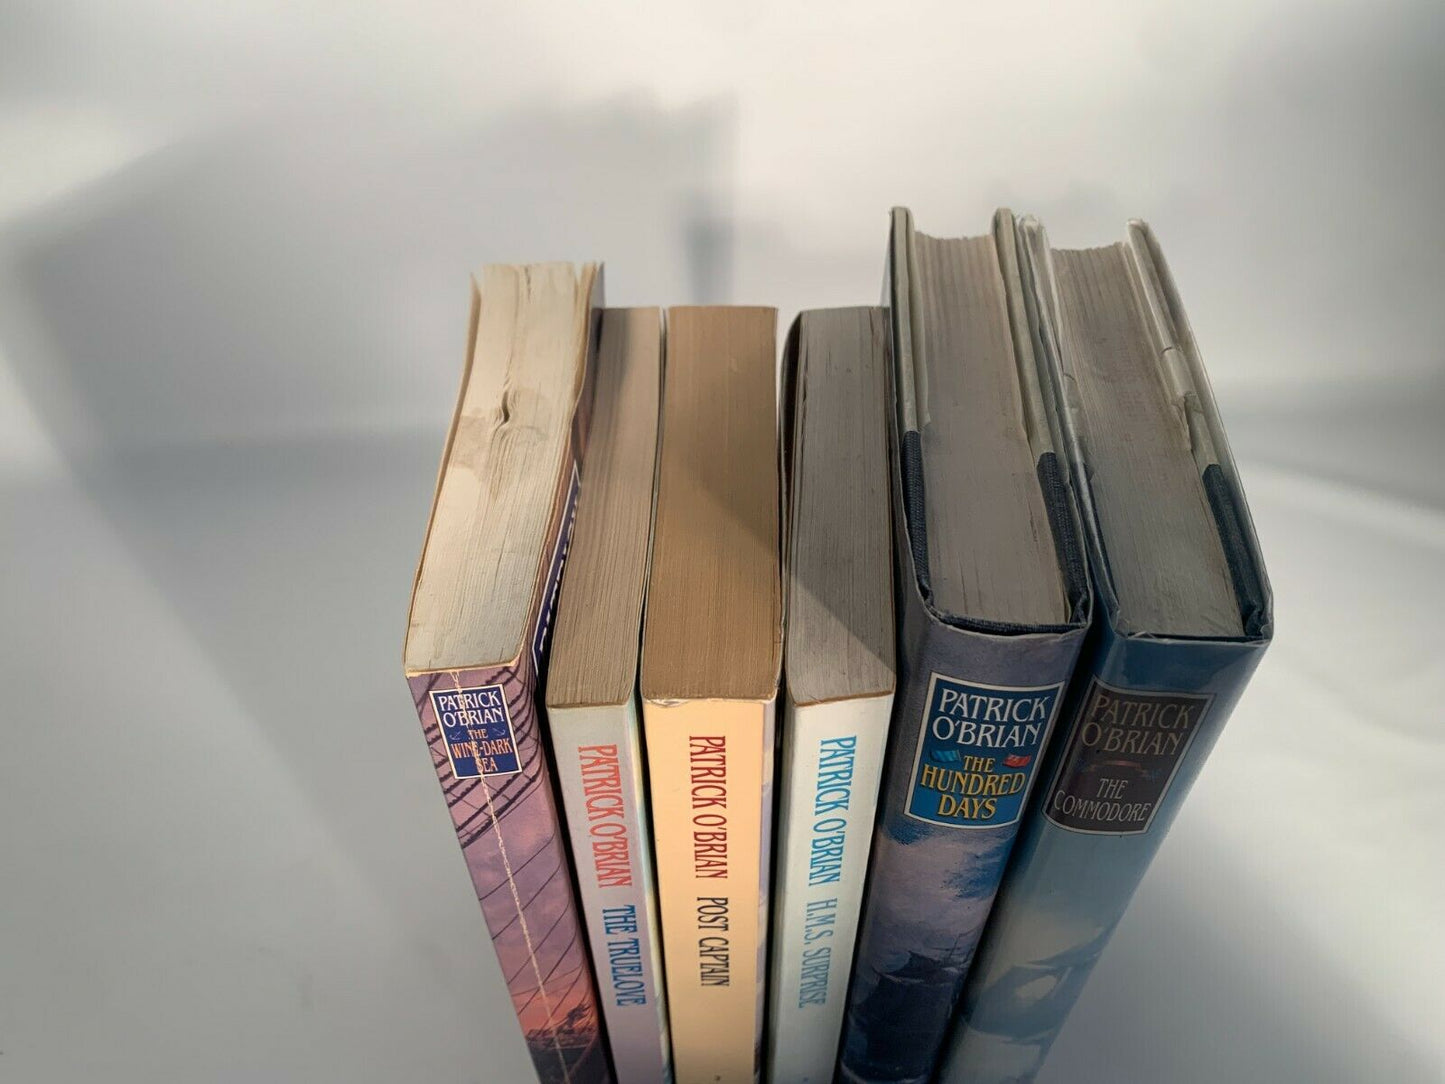 Aubrey Maturin Book Series by Patrick O'Brian [Lot of 6]